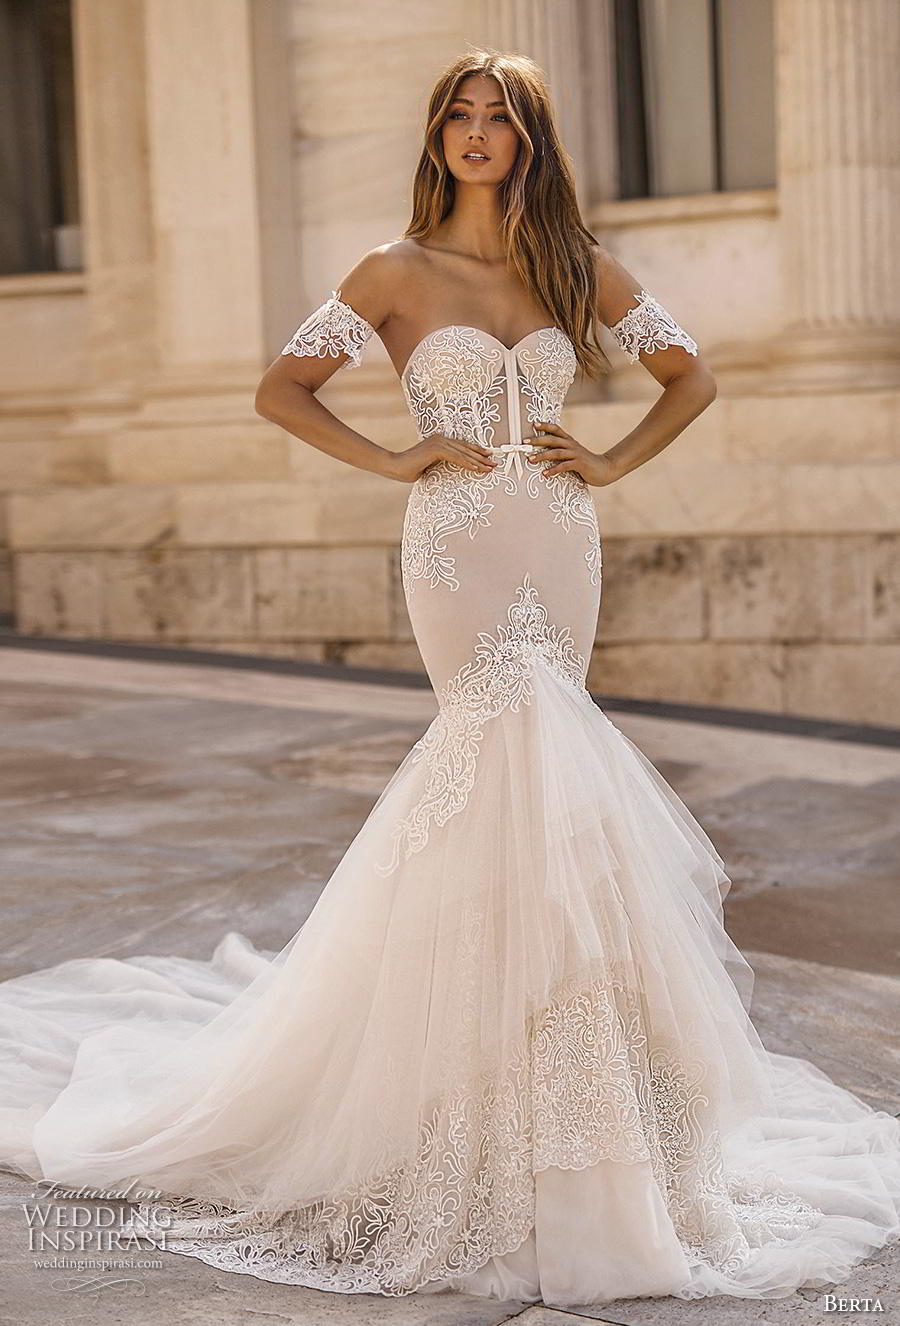 Berta Fall 2019 Wedding Dresses — “Athens” Bridal Collection | Wedding ...